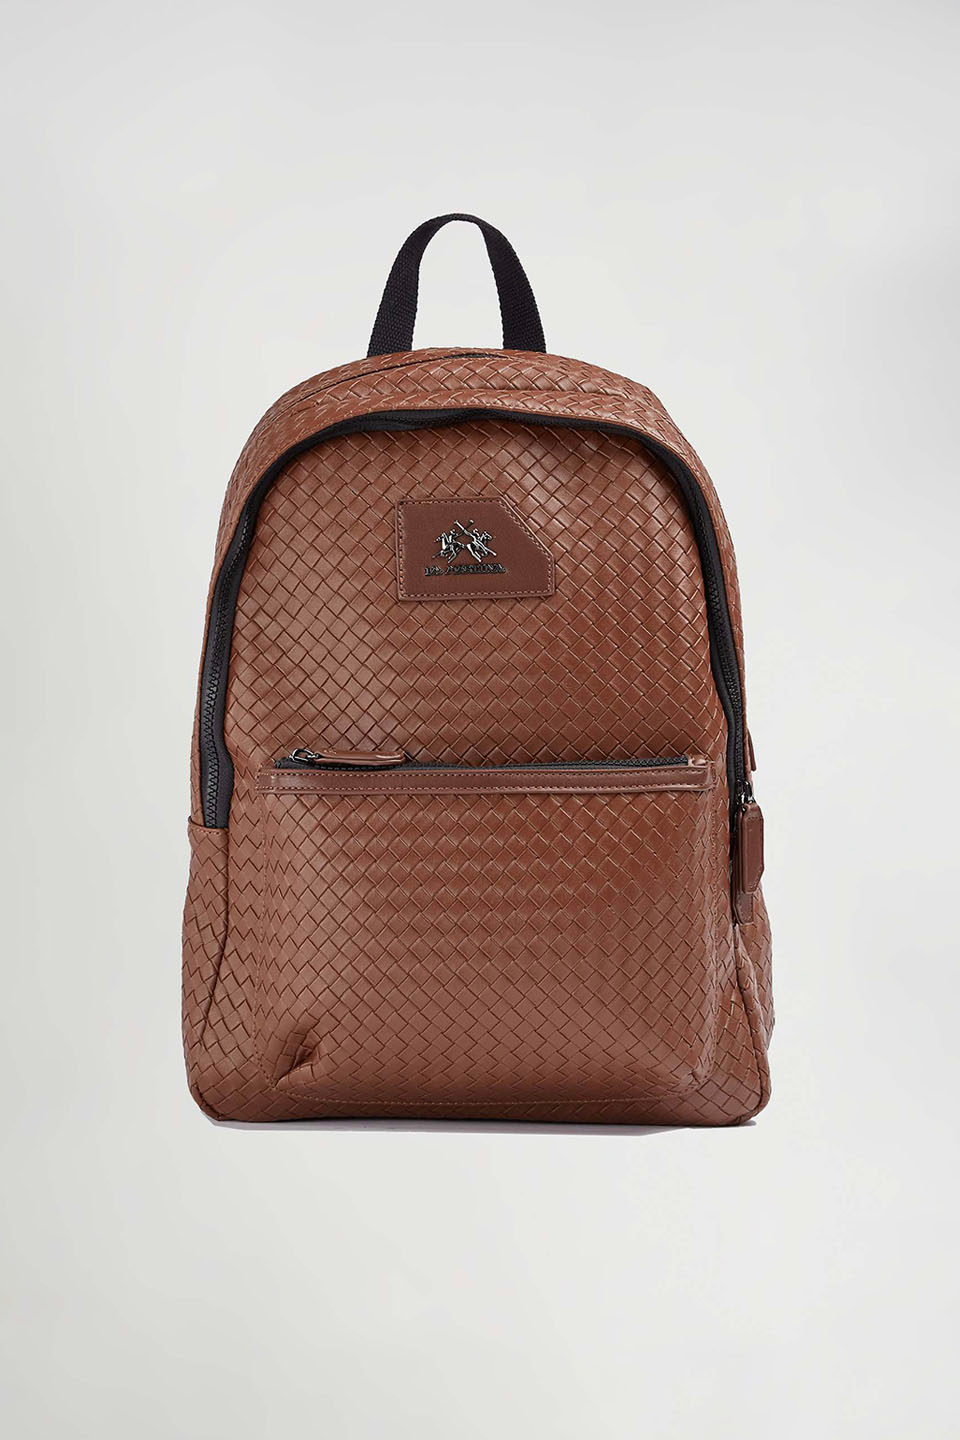 PU leather backpack - La Martina - Official Online Shop